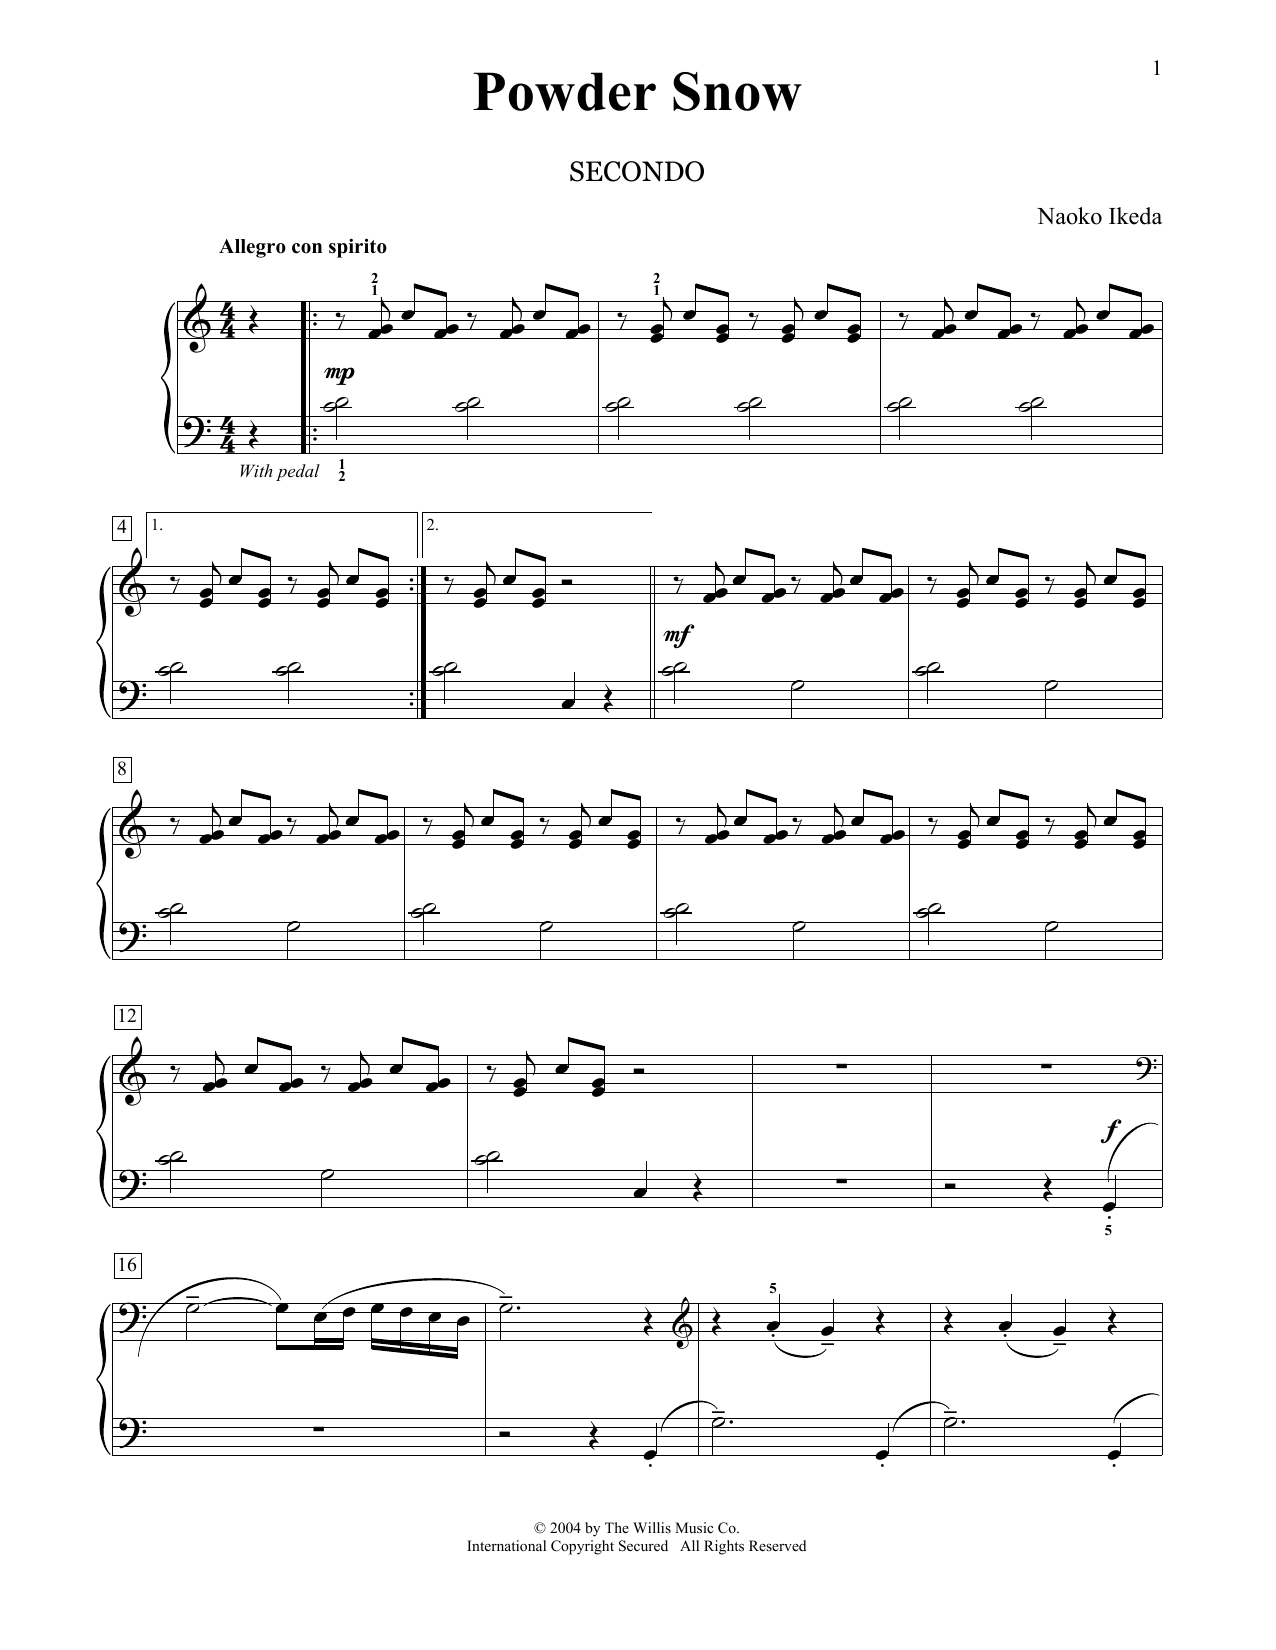 Naoko Ikeda Powder Snow Sheet Music Notes & Chords for Piano Duet - Download or Print PDF